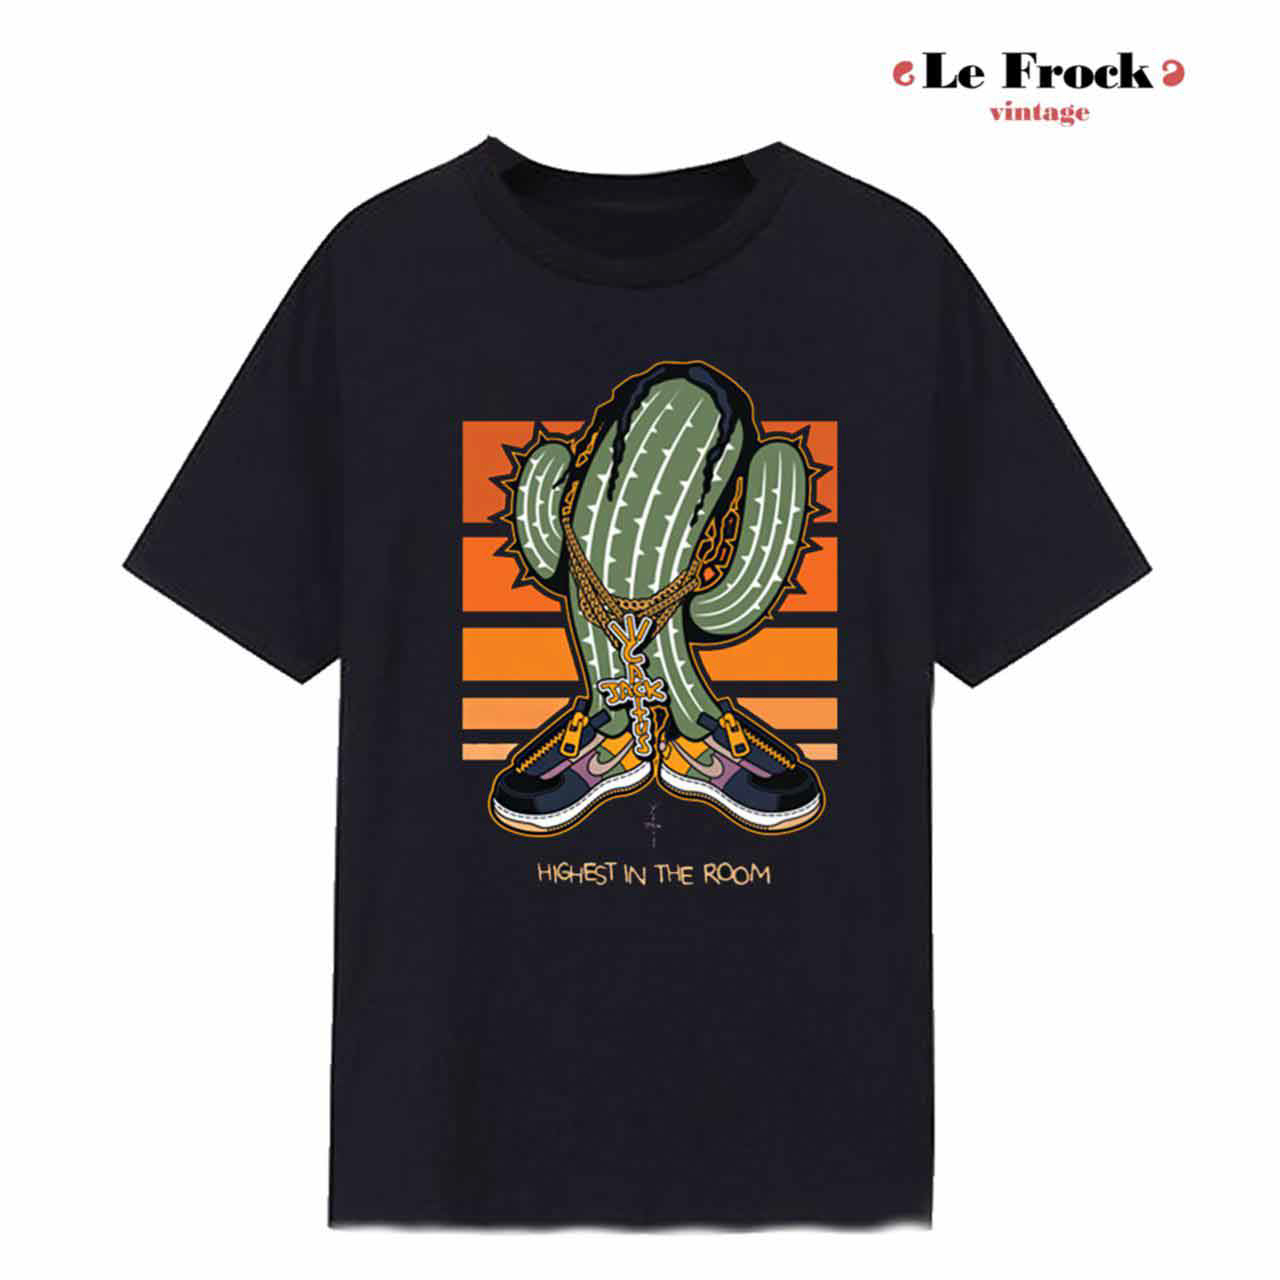 Travis Scott Nike Air Force 1 Shirt Black – Cactus Jack Toon